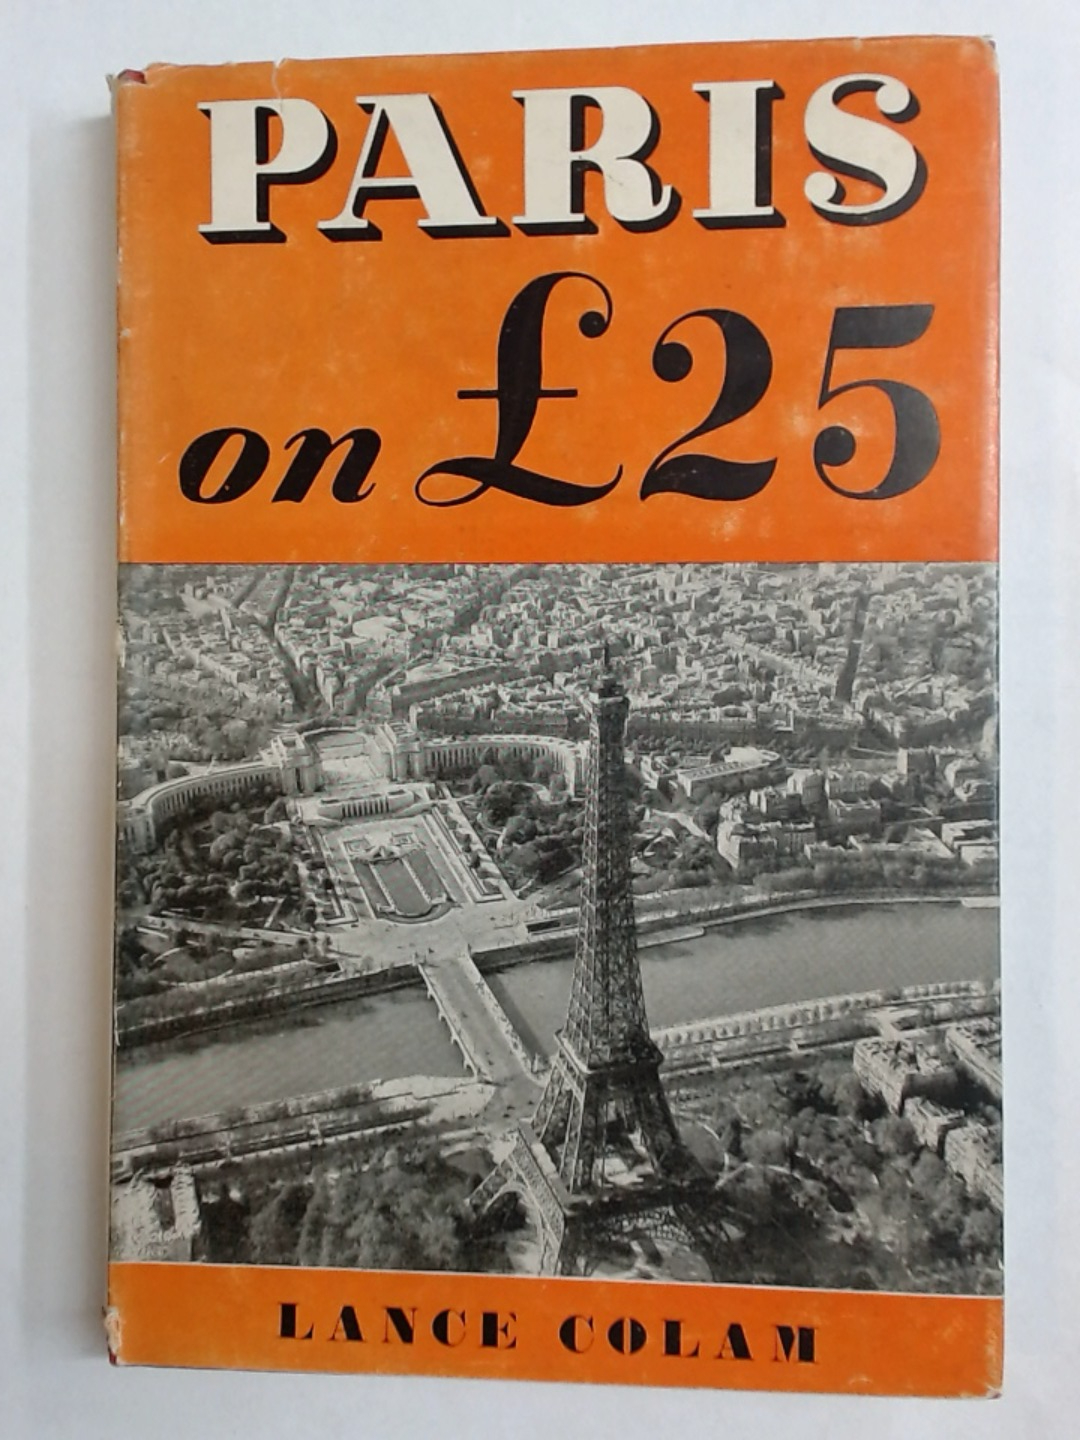 Paris on £25.